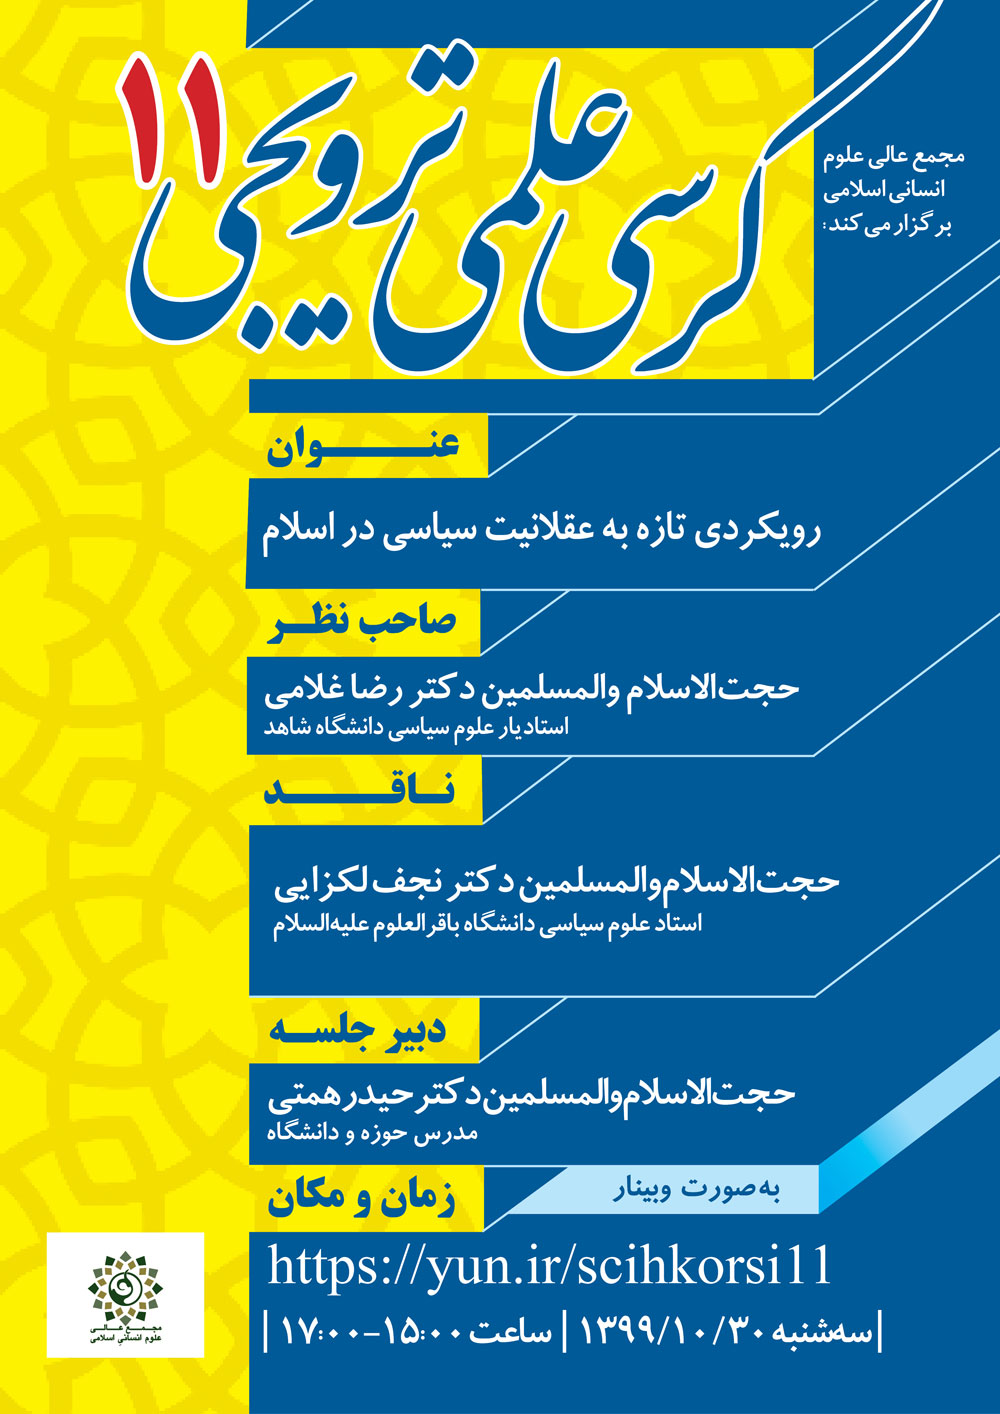 Korsi119910291 1 - یازدهمین کرسی ترویجی مجمع عالی علوم انسانی اسلامی برگزار می‌شود